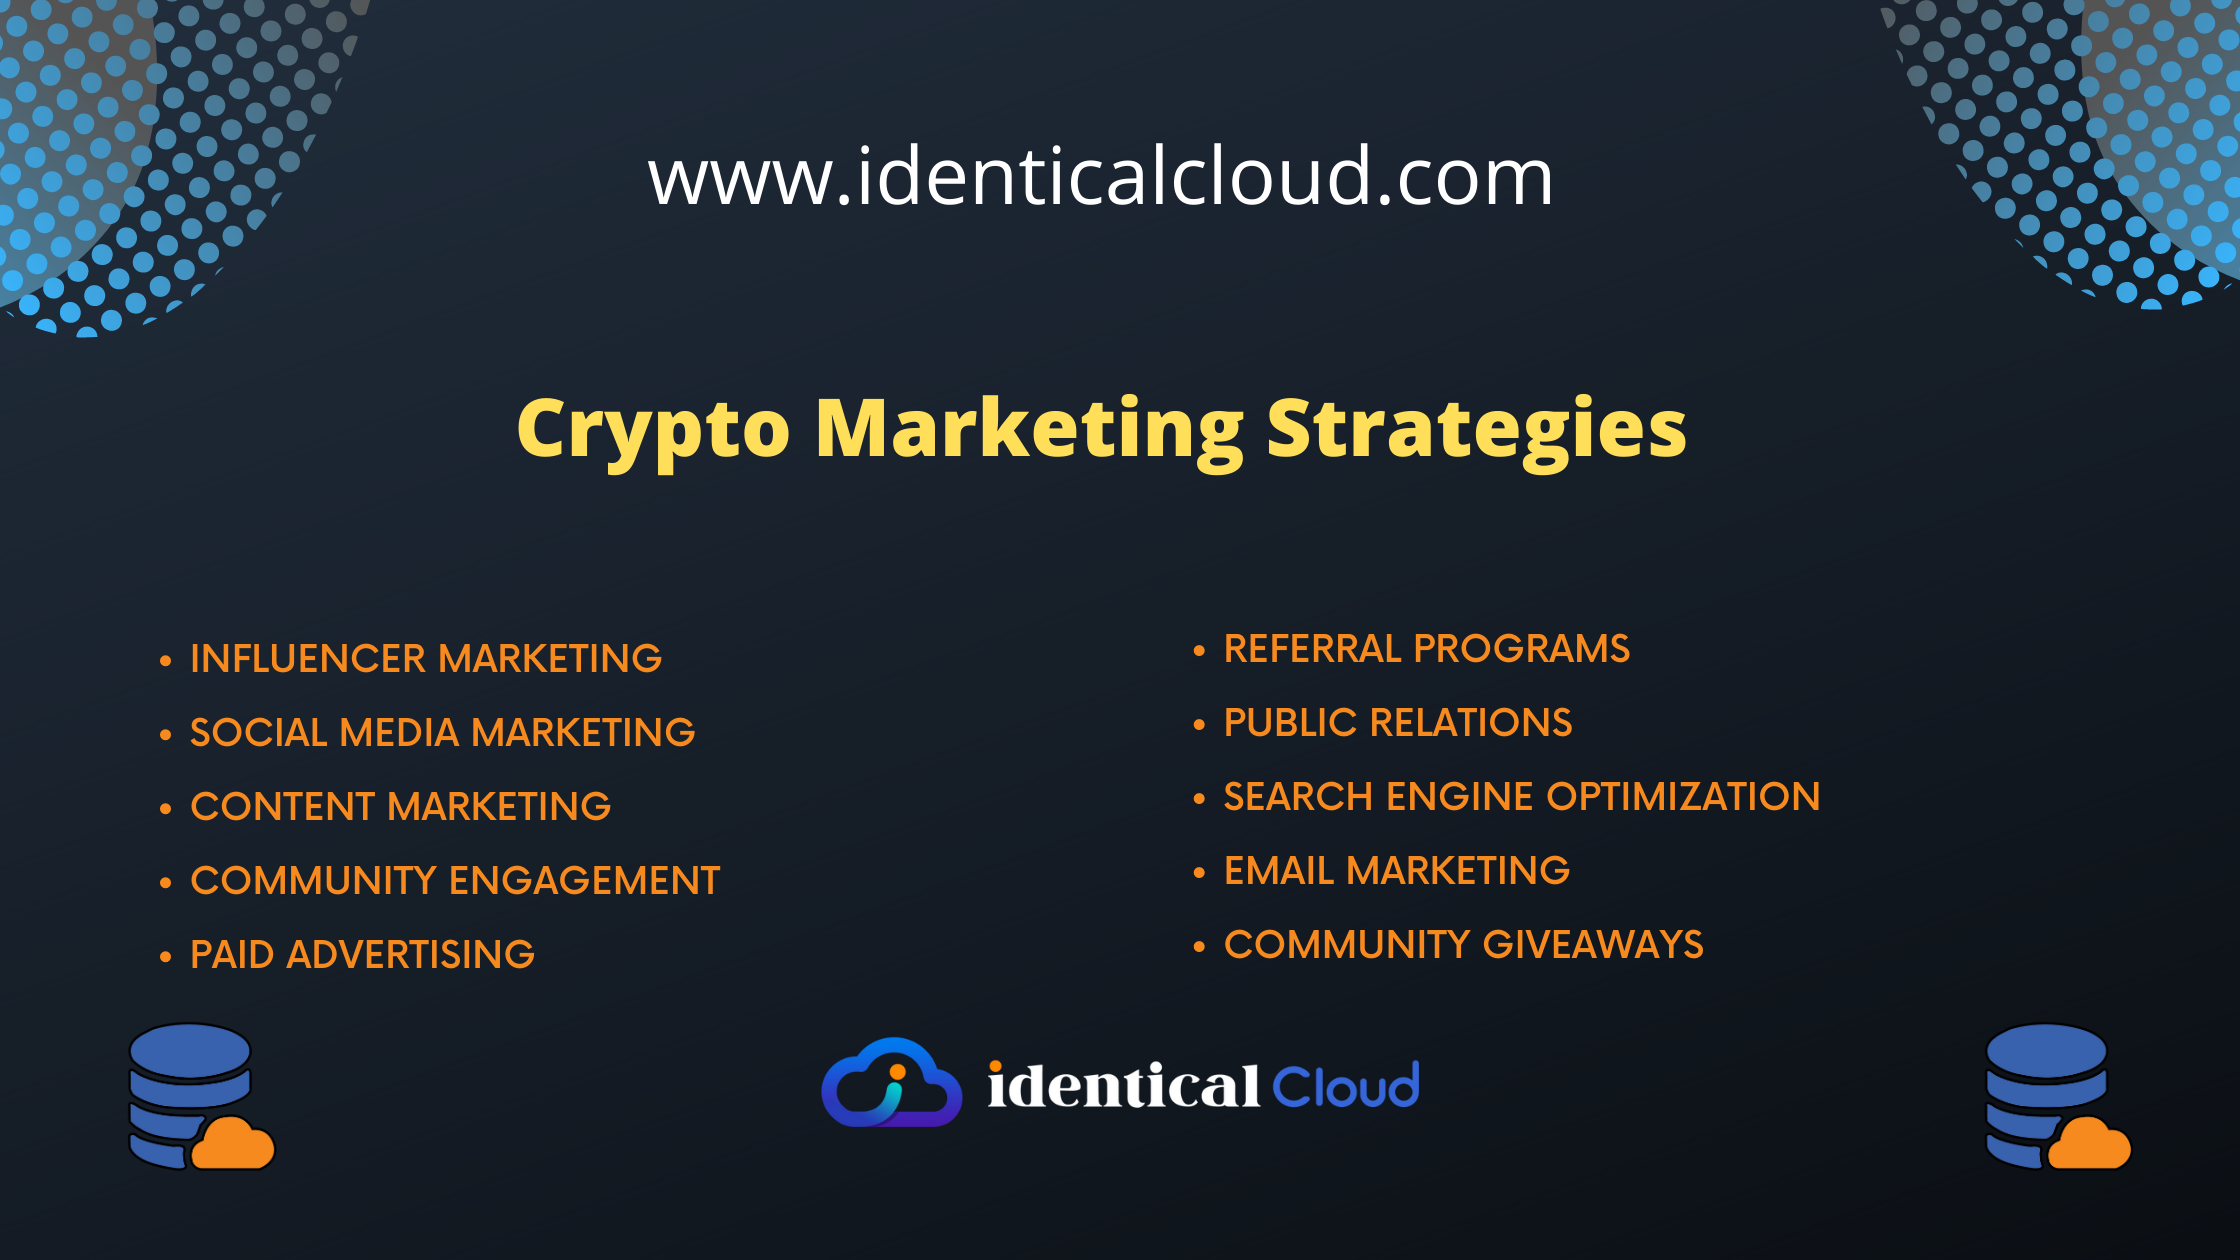 Crypto Marketing Strategies - identicalcloud.com